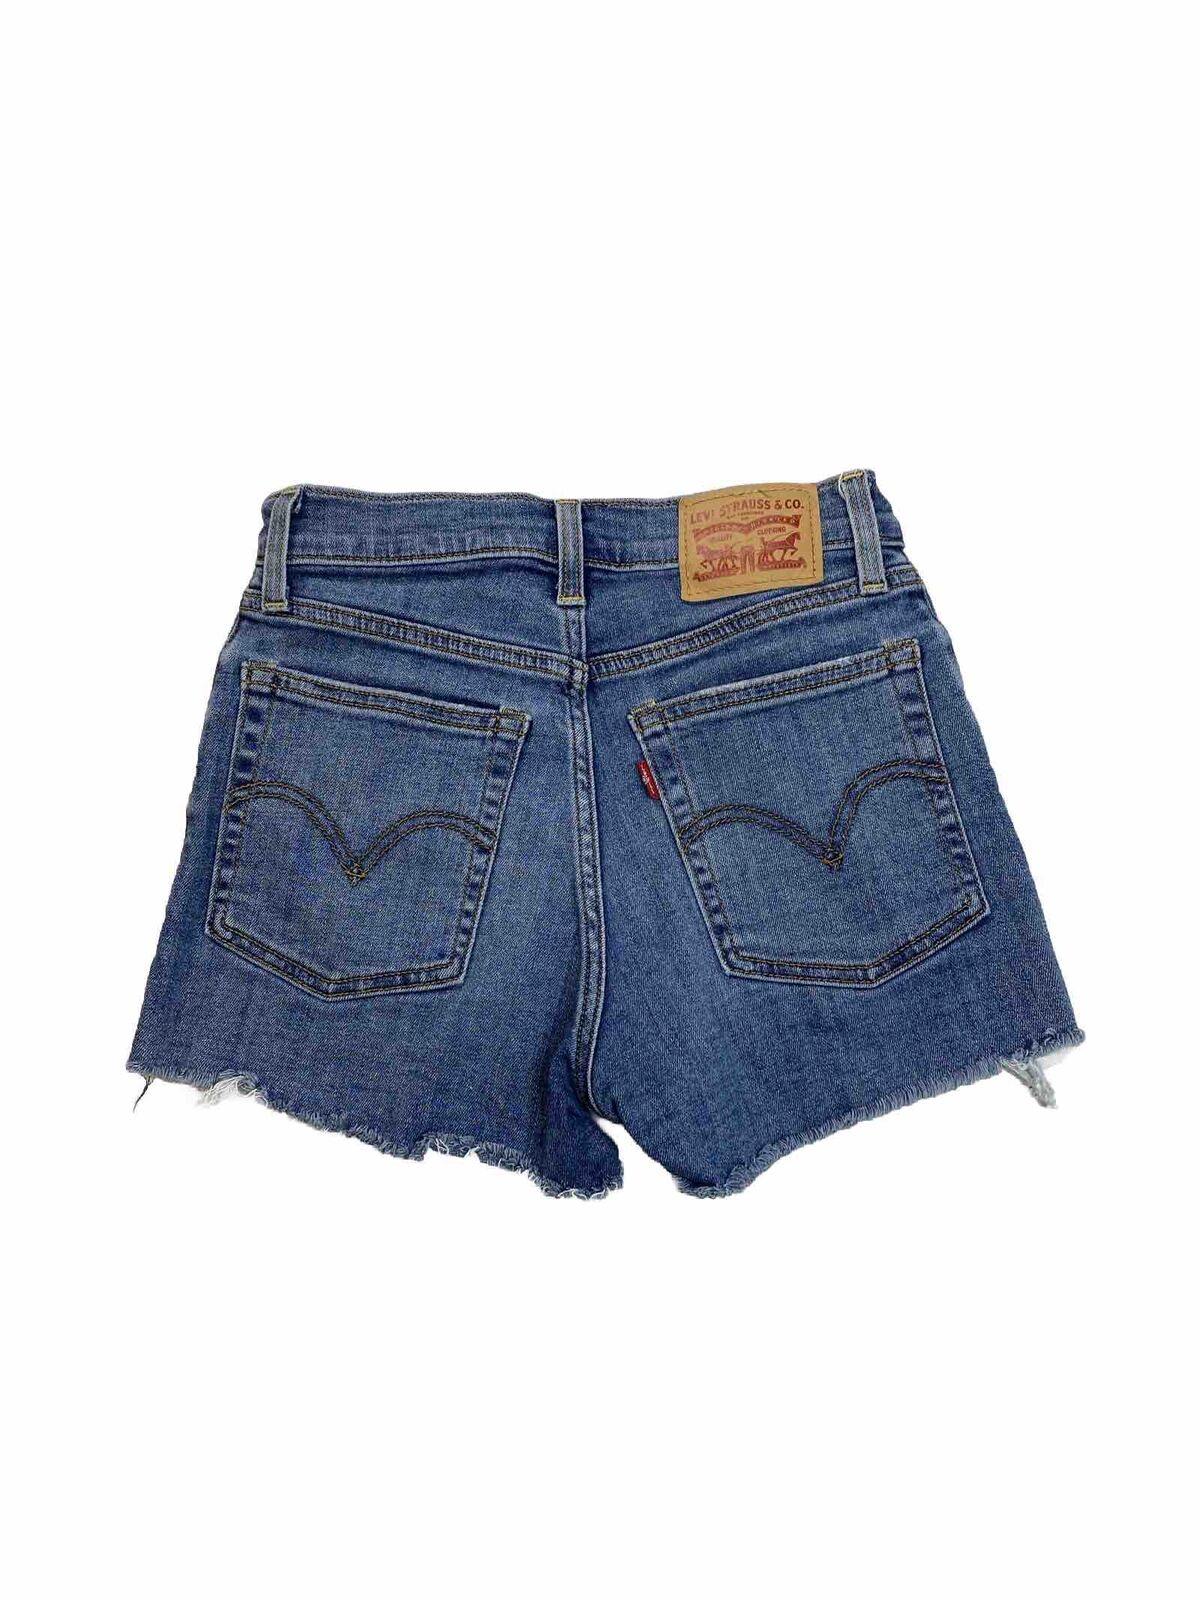 Levi's Women's Medium Wash Frayed Edge Jean Shorts - 25